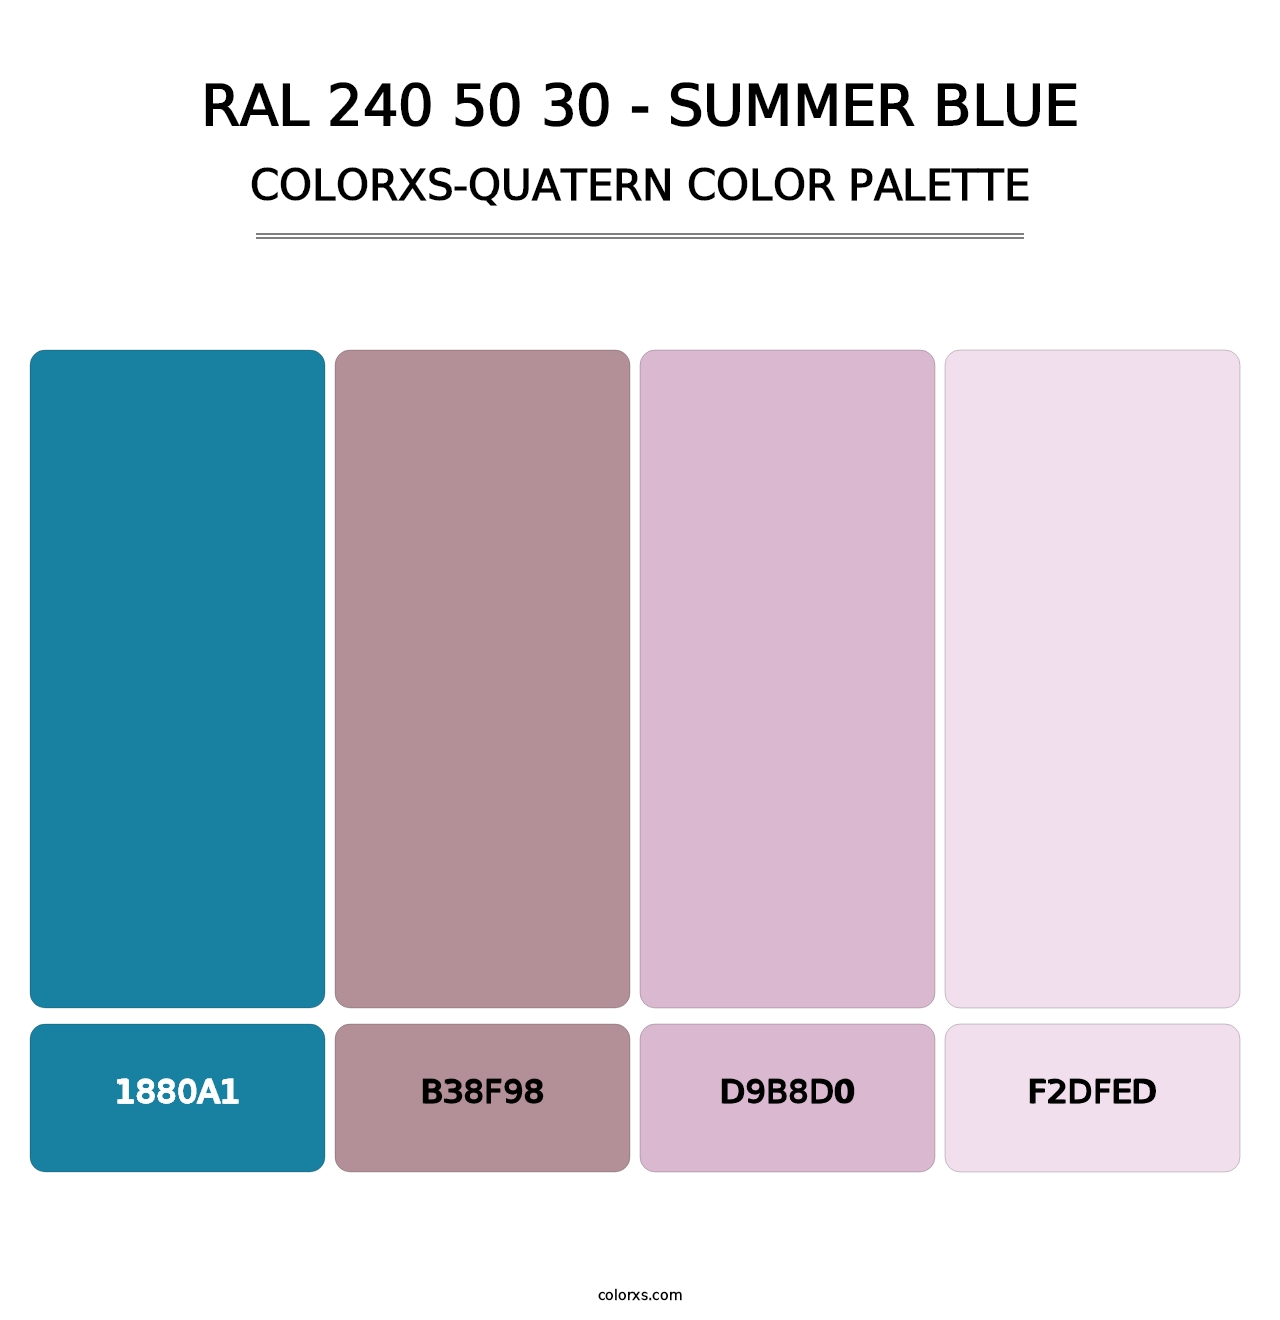 RAL 240 50 30 - Summer Blue - Colorxs Quatern Palette